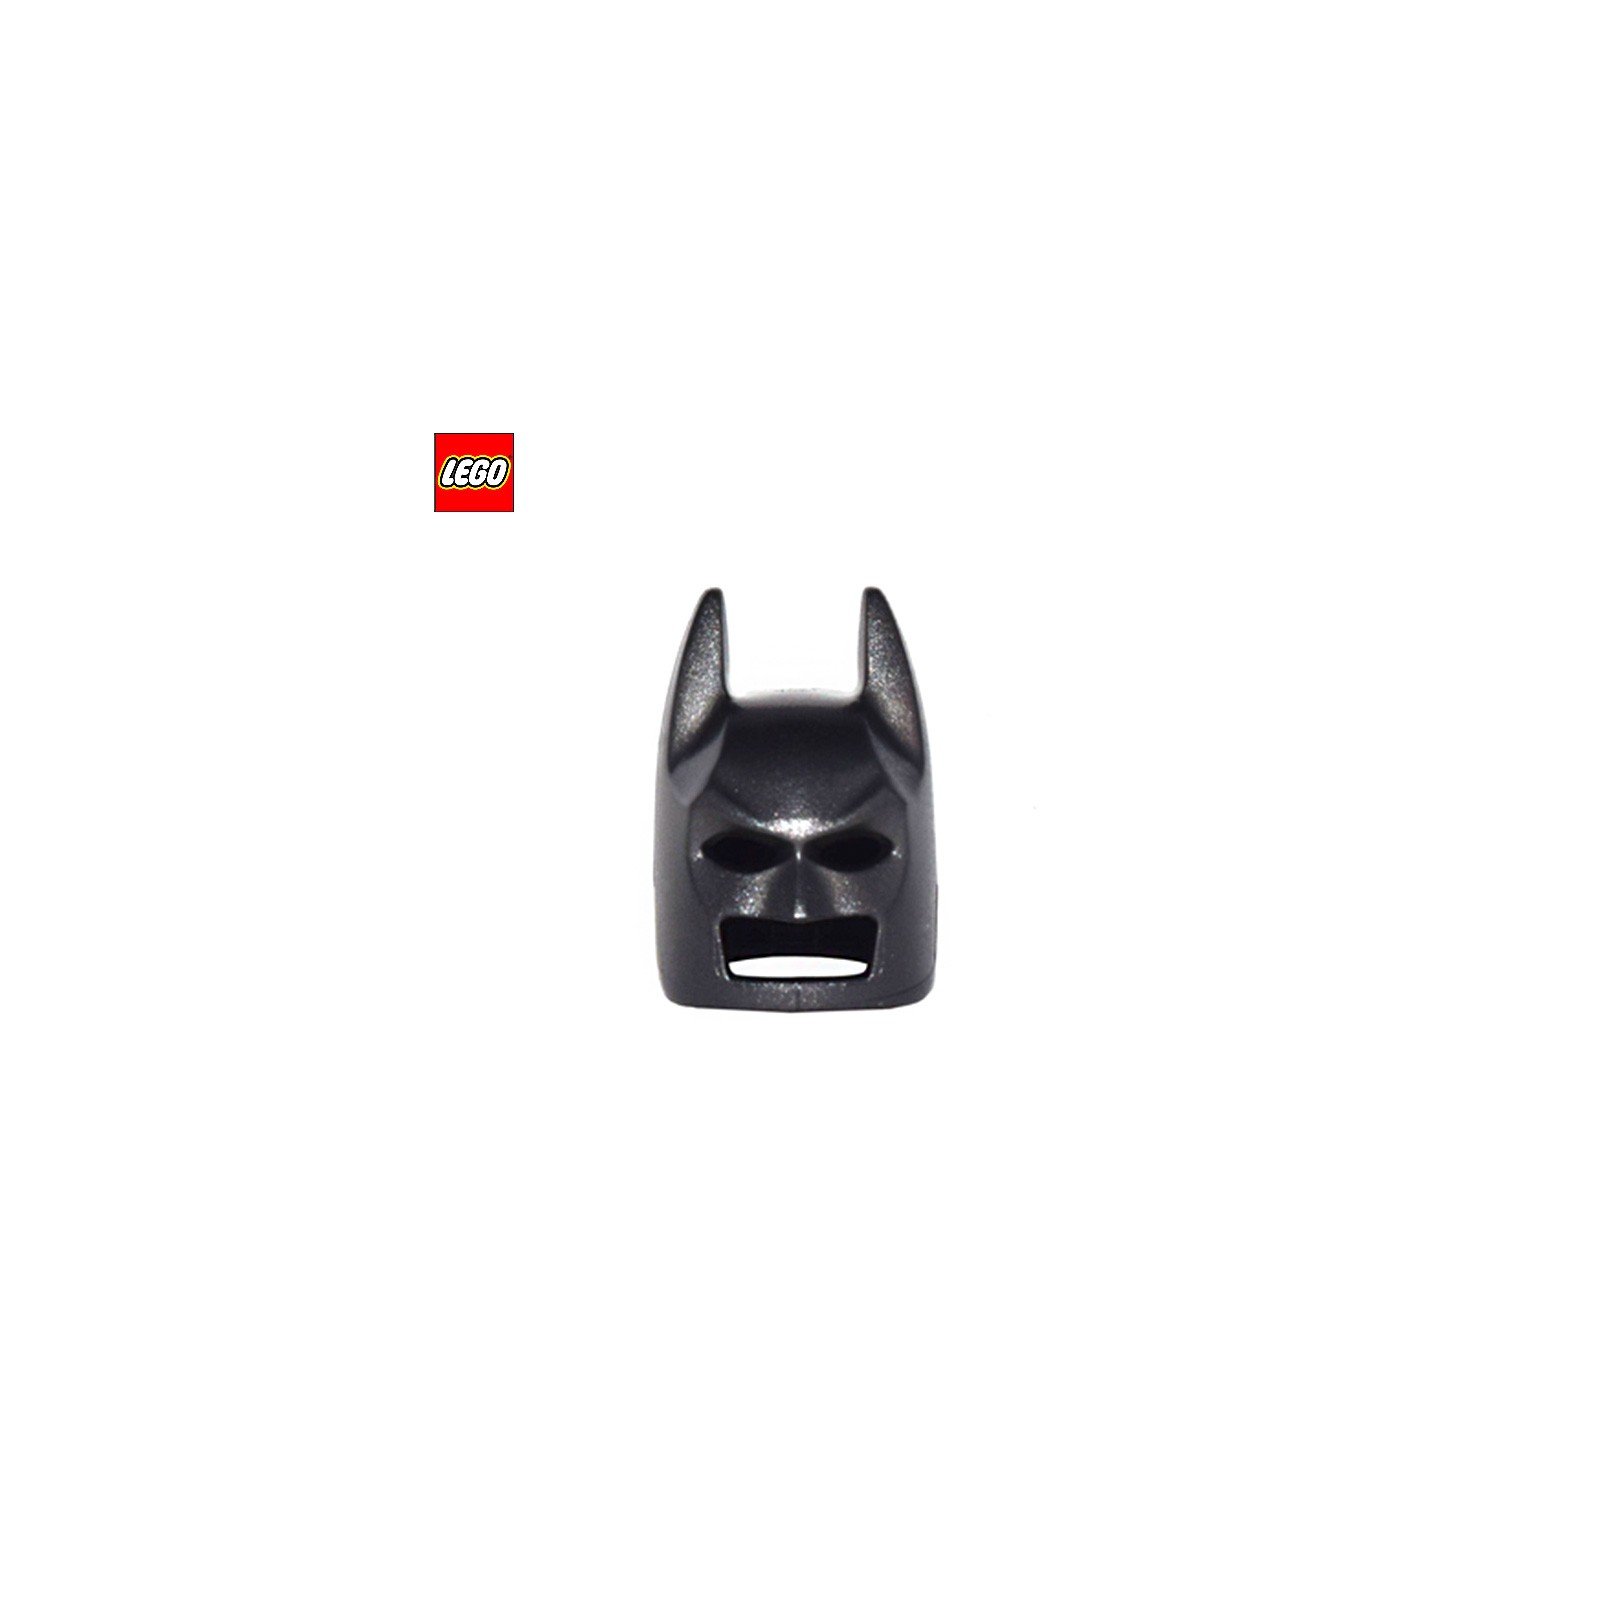 Casque / Masque de Batman - Pièce LEGO® 10113